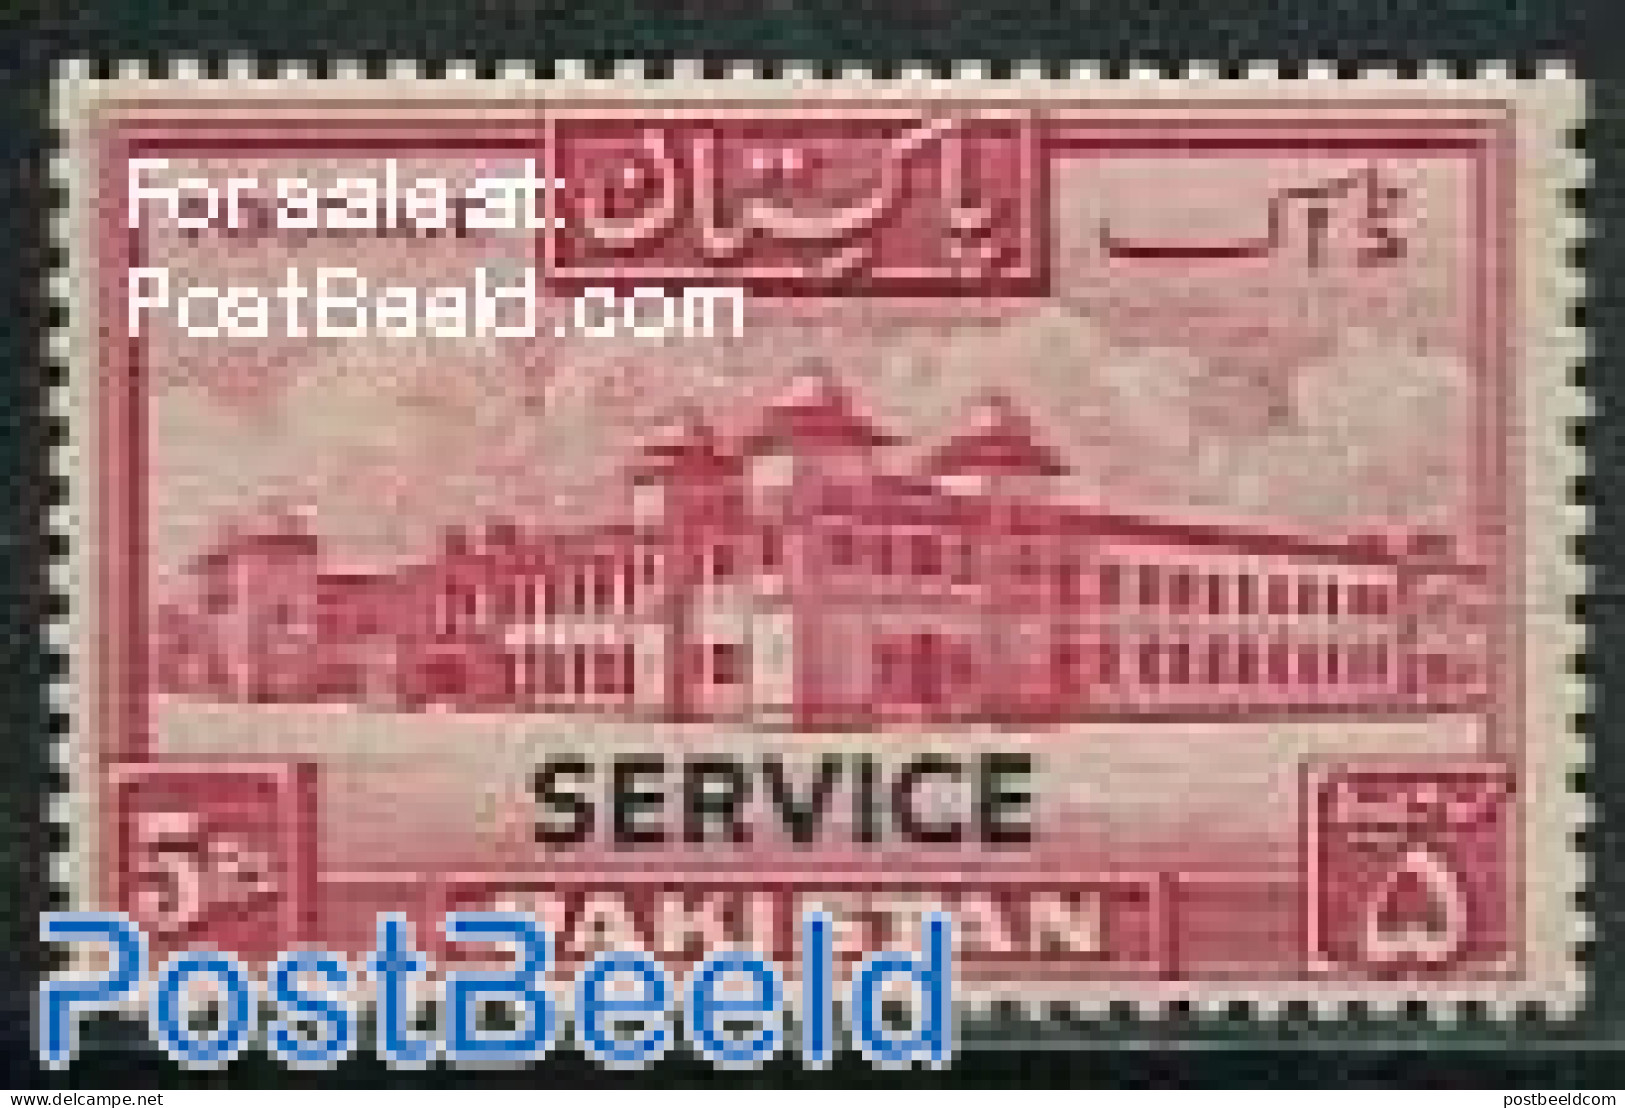 Pakistan 1948 5Rs, On Service, Stamp Out Of Set, Mint NH - Pakistán